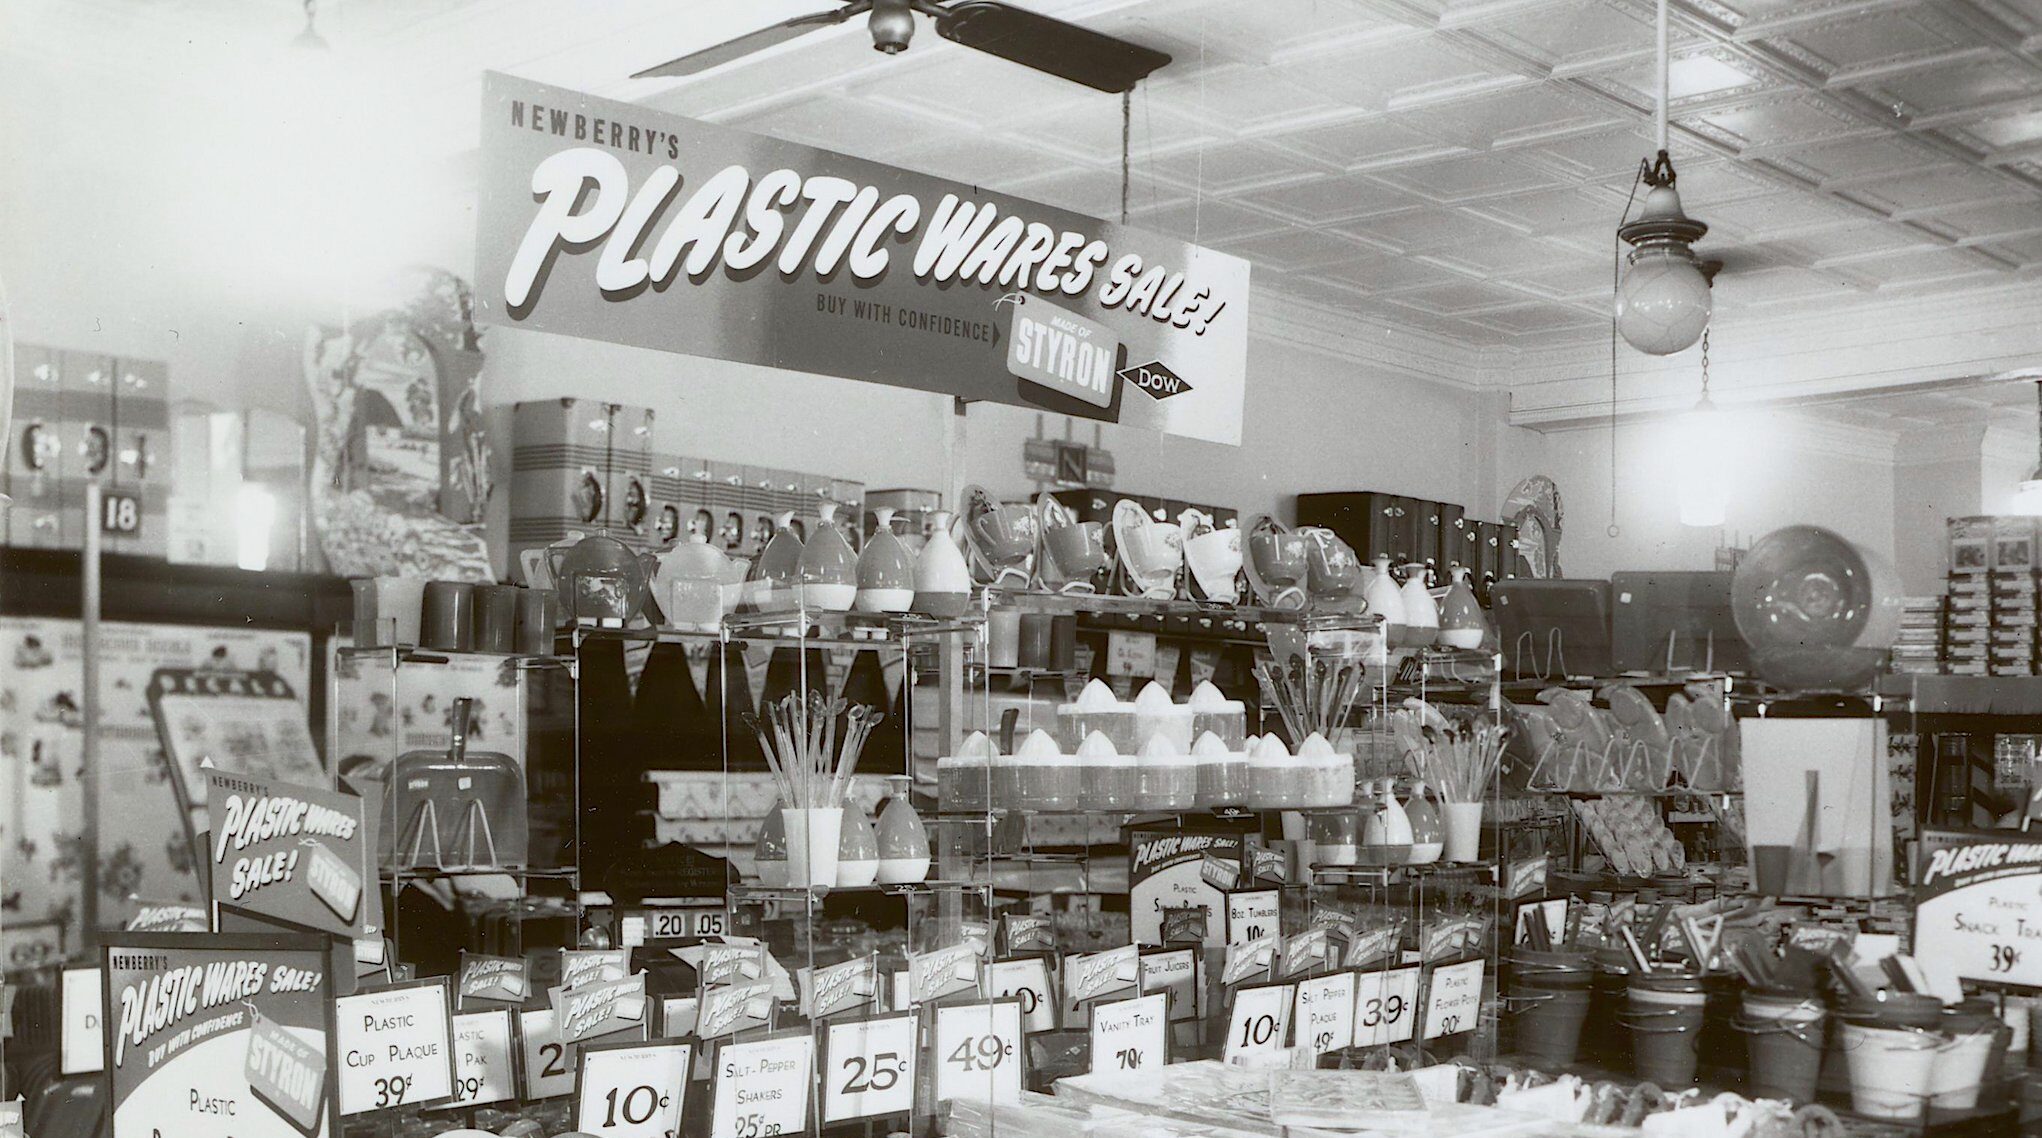 sales display of plastic wares